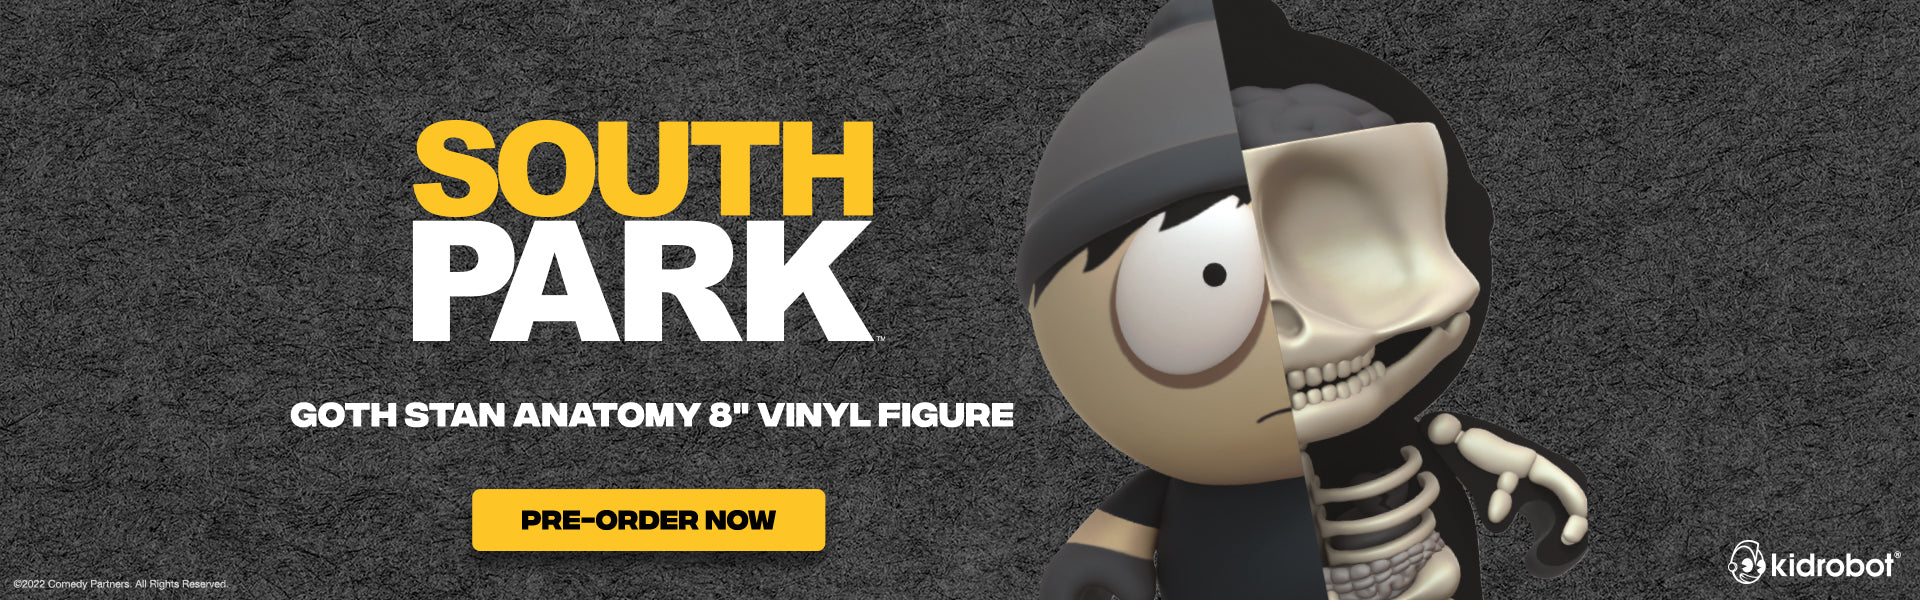 South Park Goth Stan Anatomy 8" Vinyl Figure (PRE-ORDER)